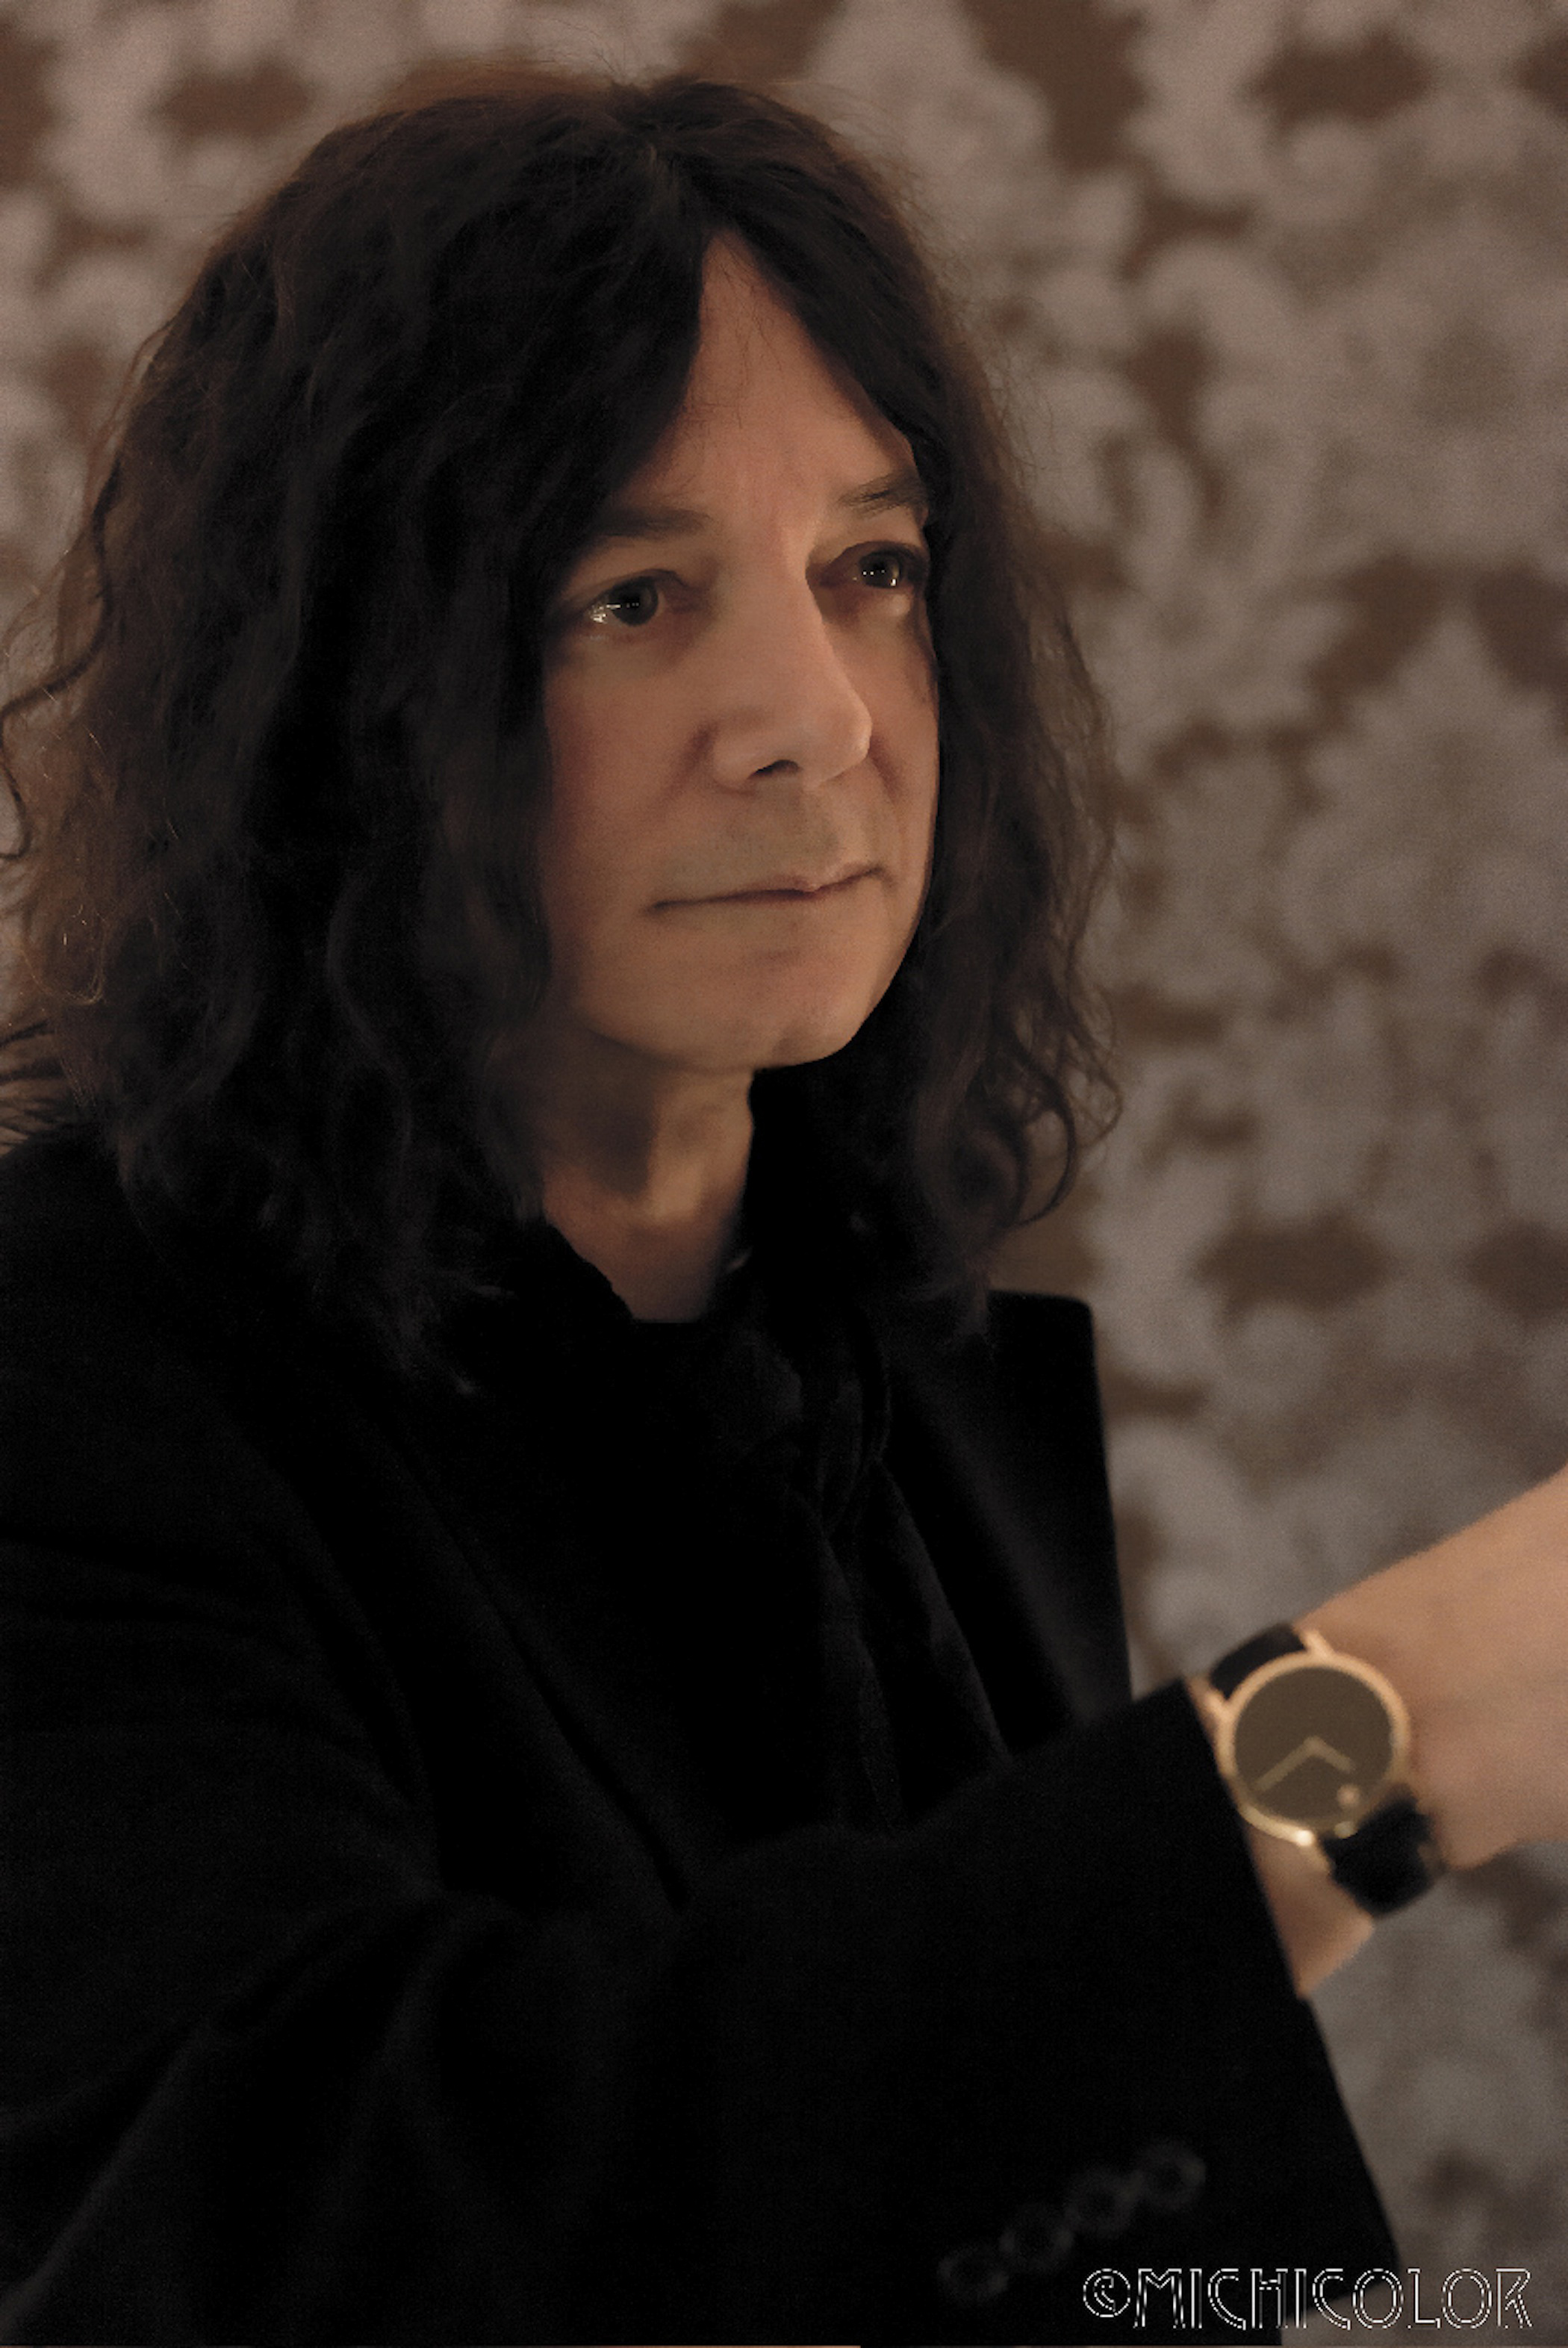 Alan Merrill portrait. London England, November 8, 2013.